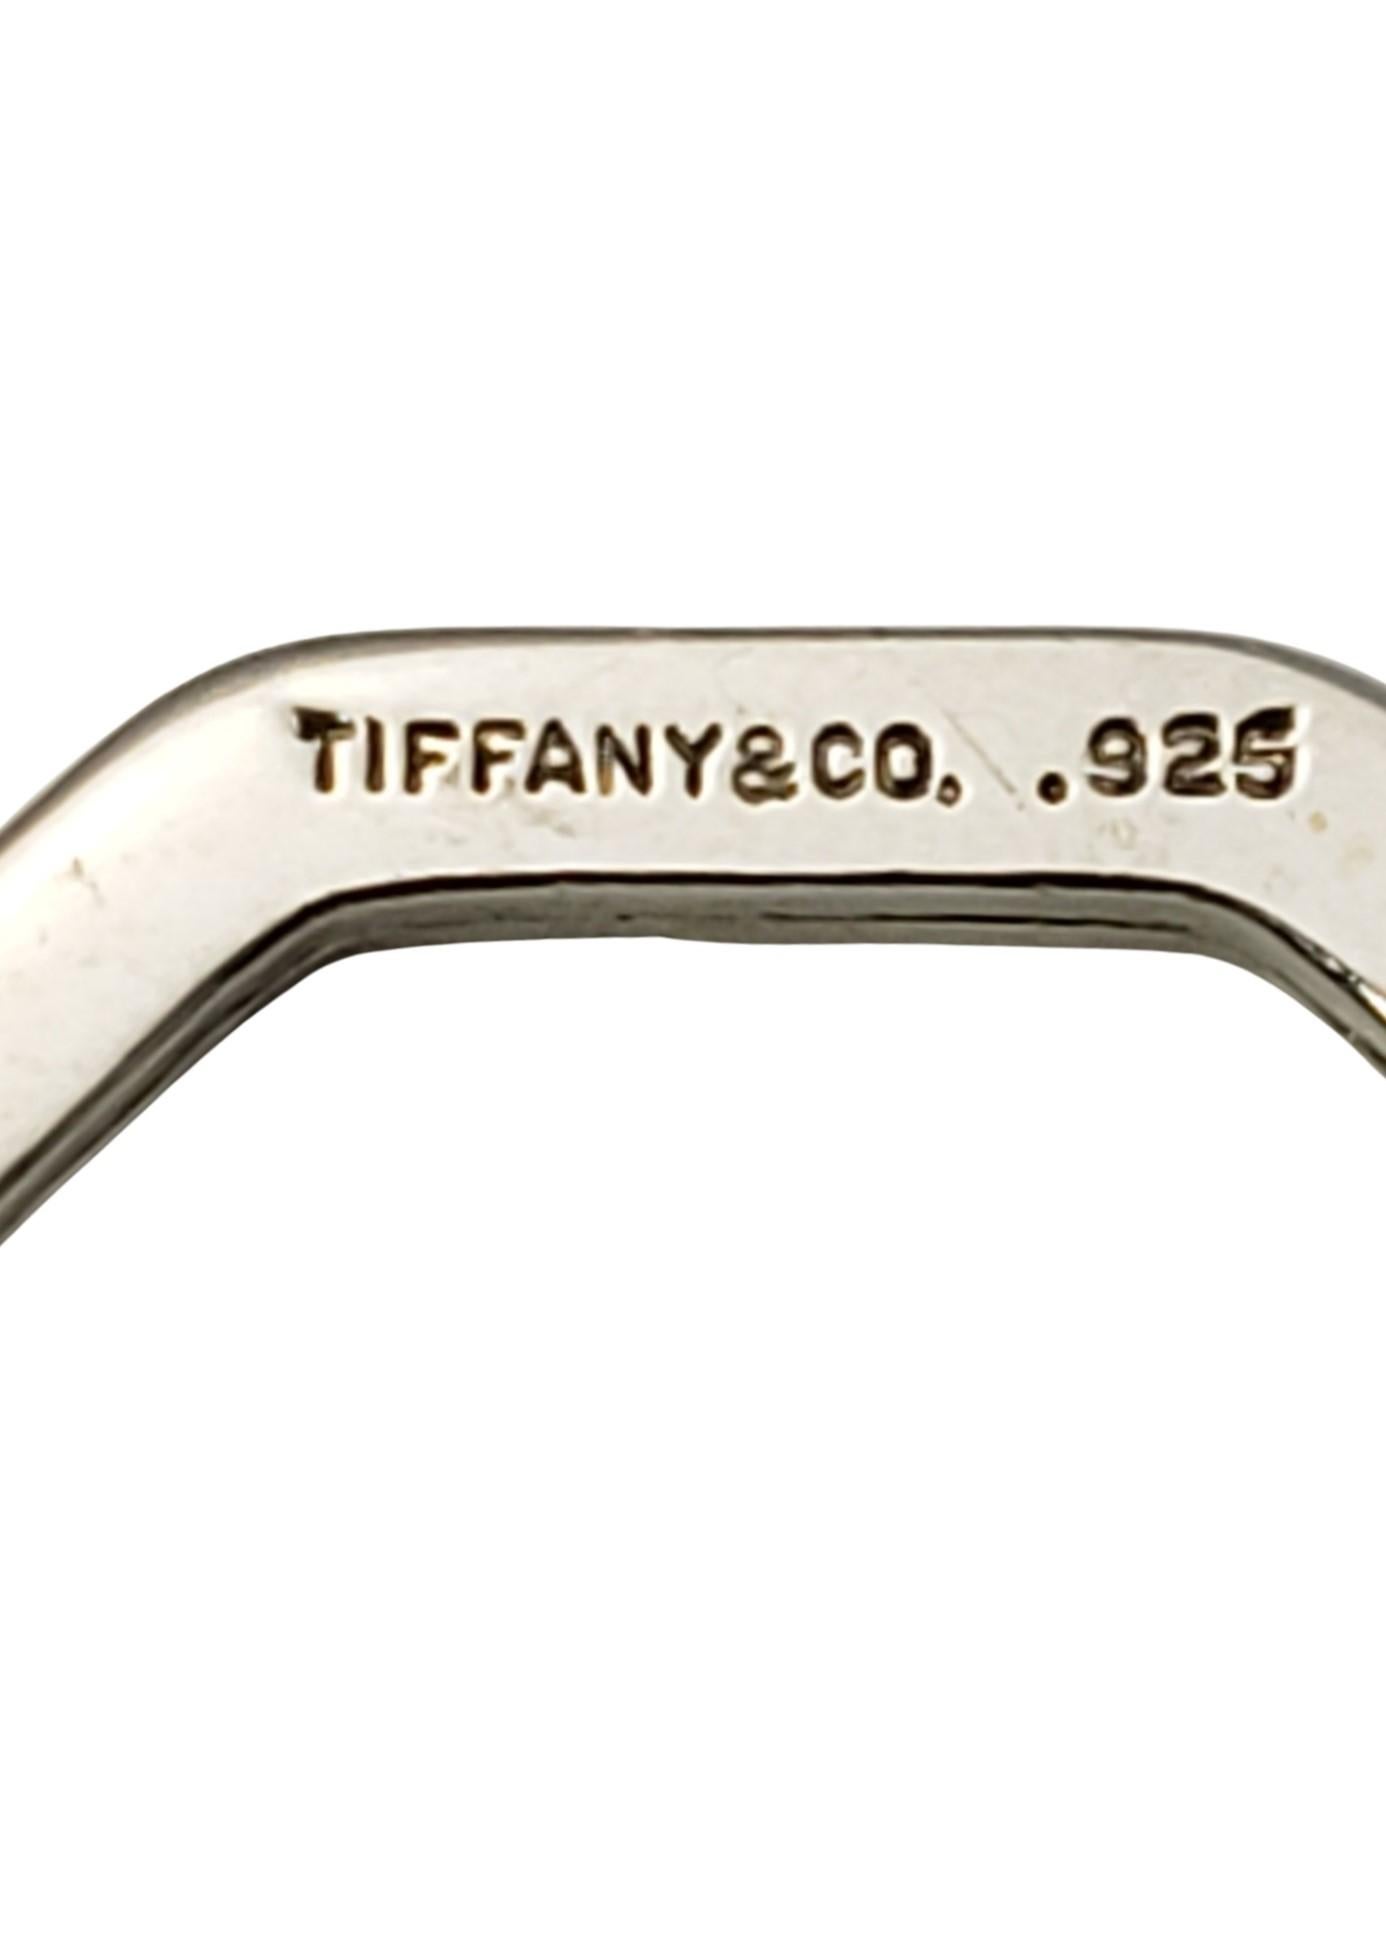 Tiffany & Co. Sterling Silver Key Ring 3